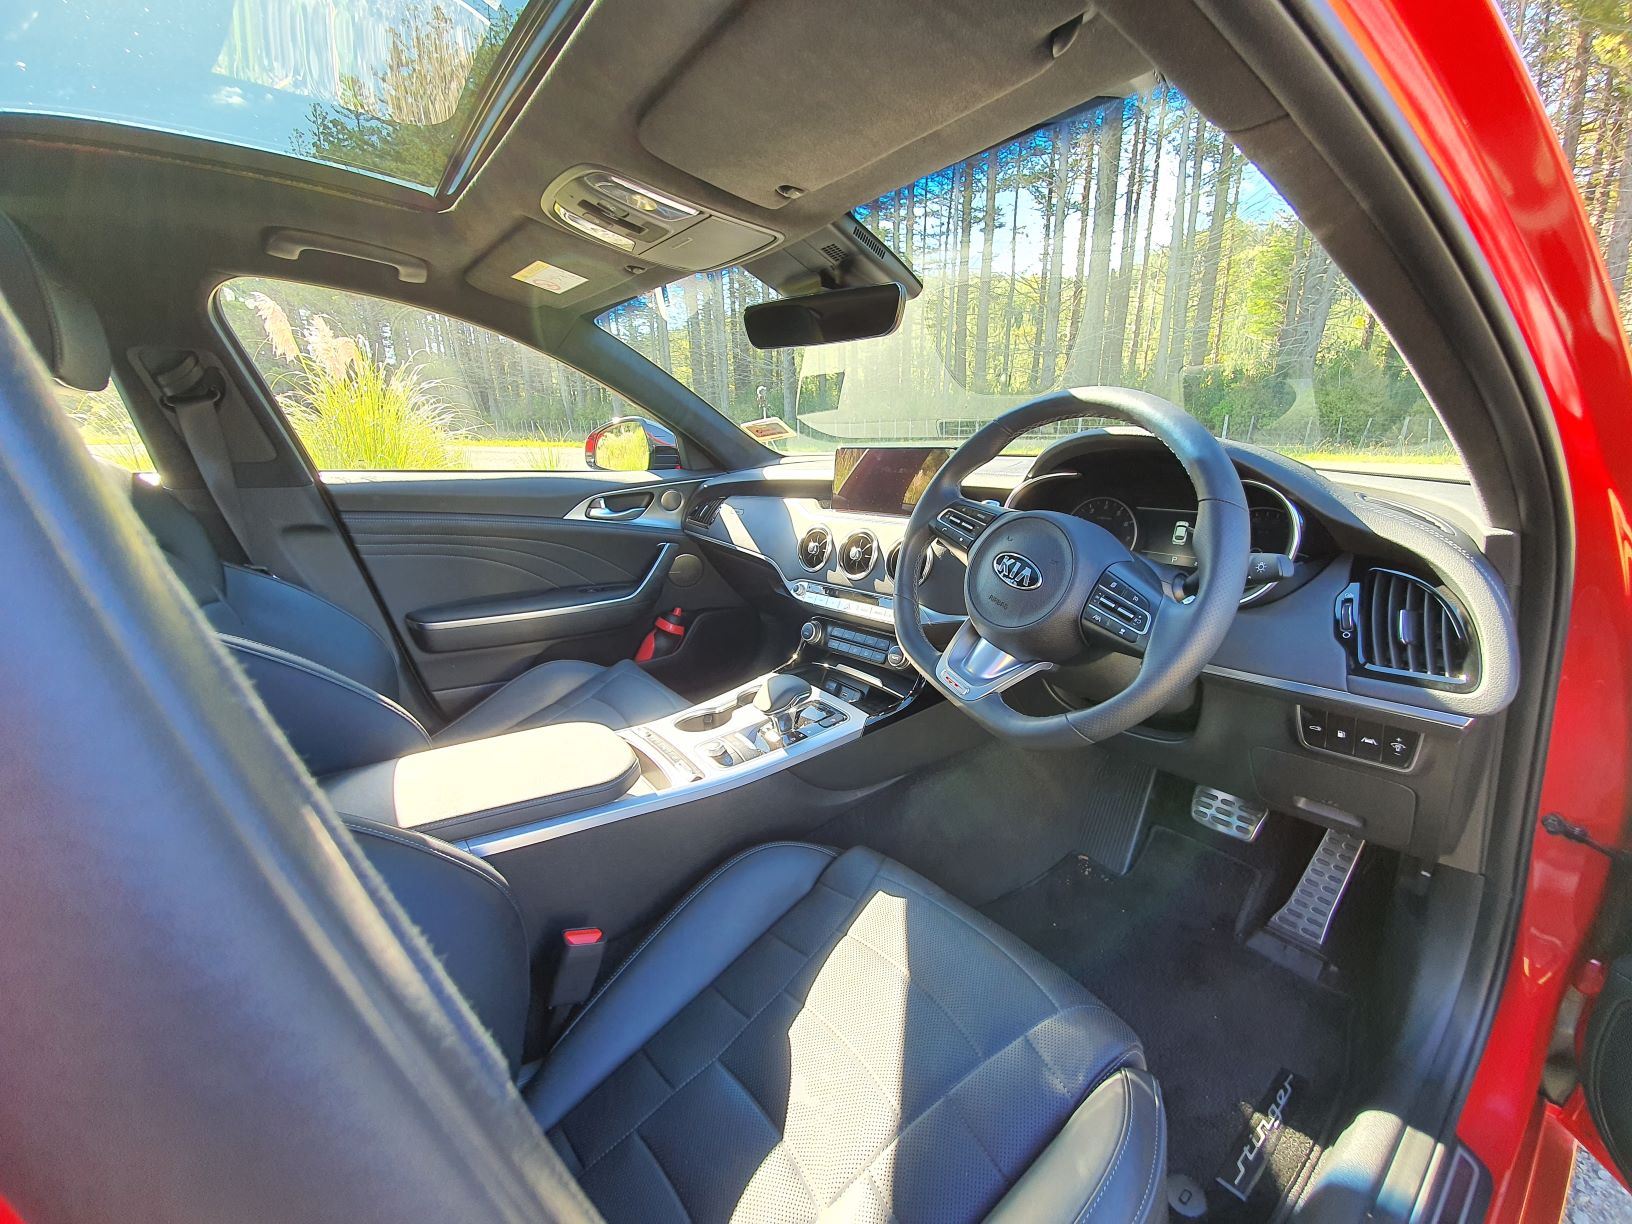 Interior of the Kia Stinger GT